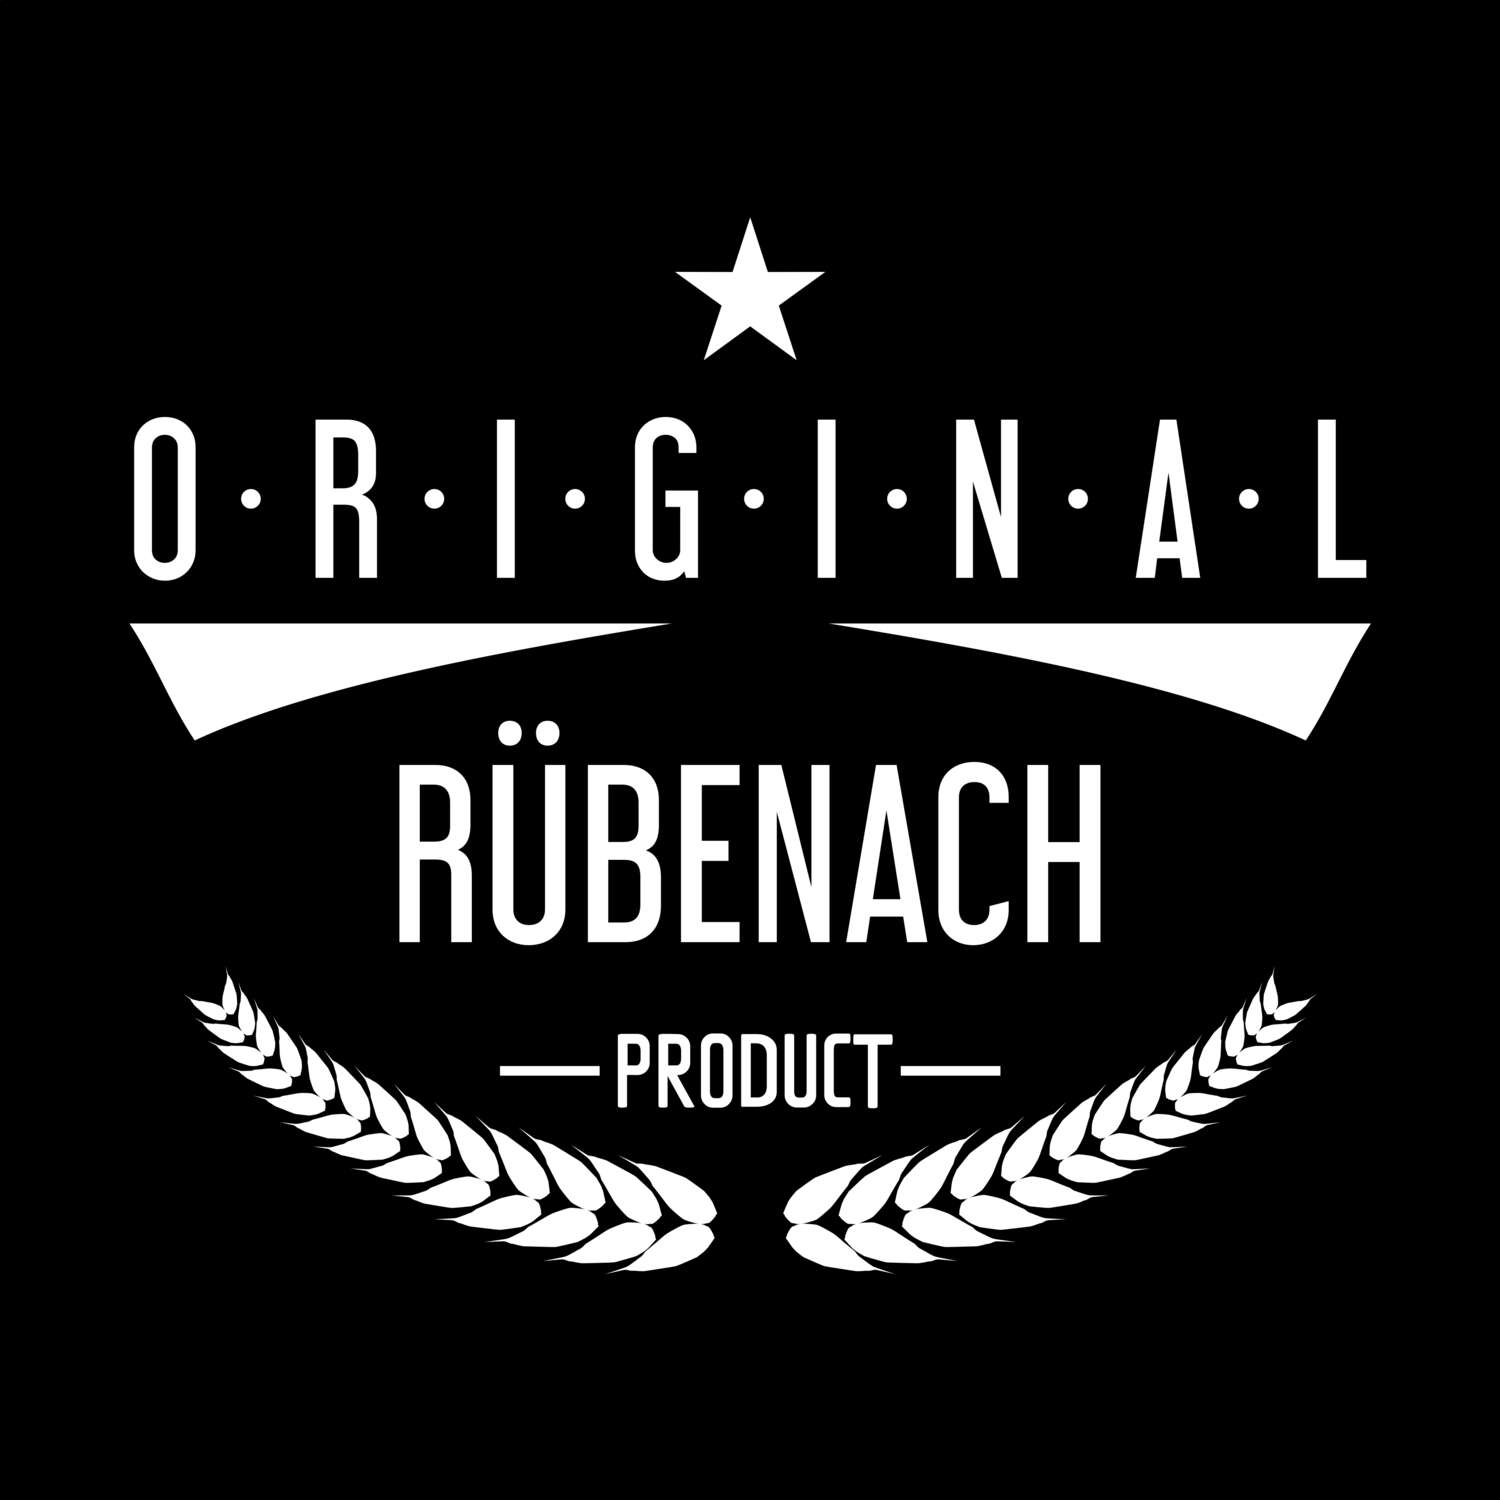 Rübenach T-Shirt »Original Product«